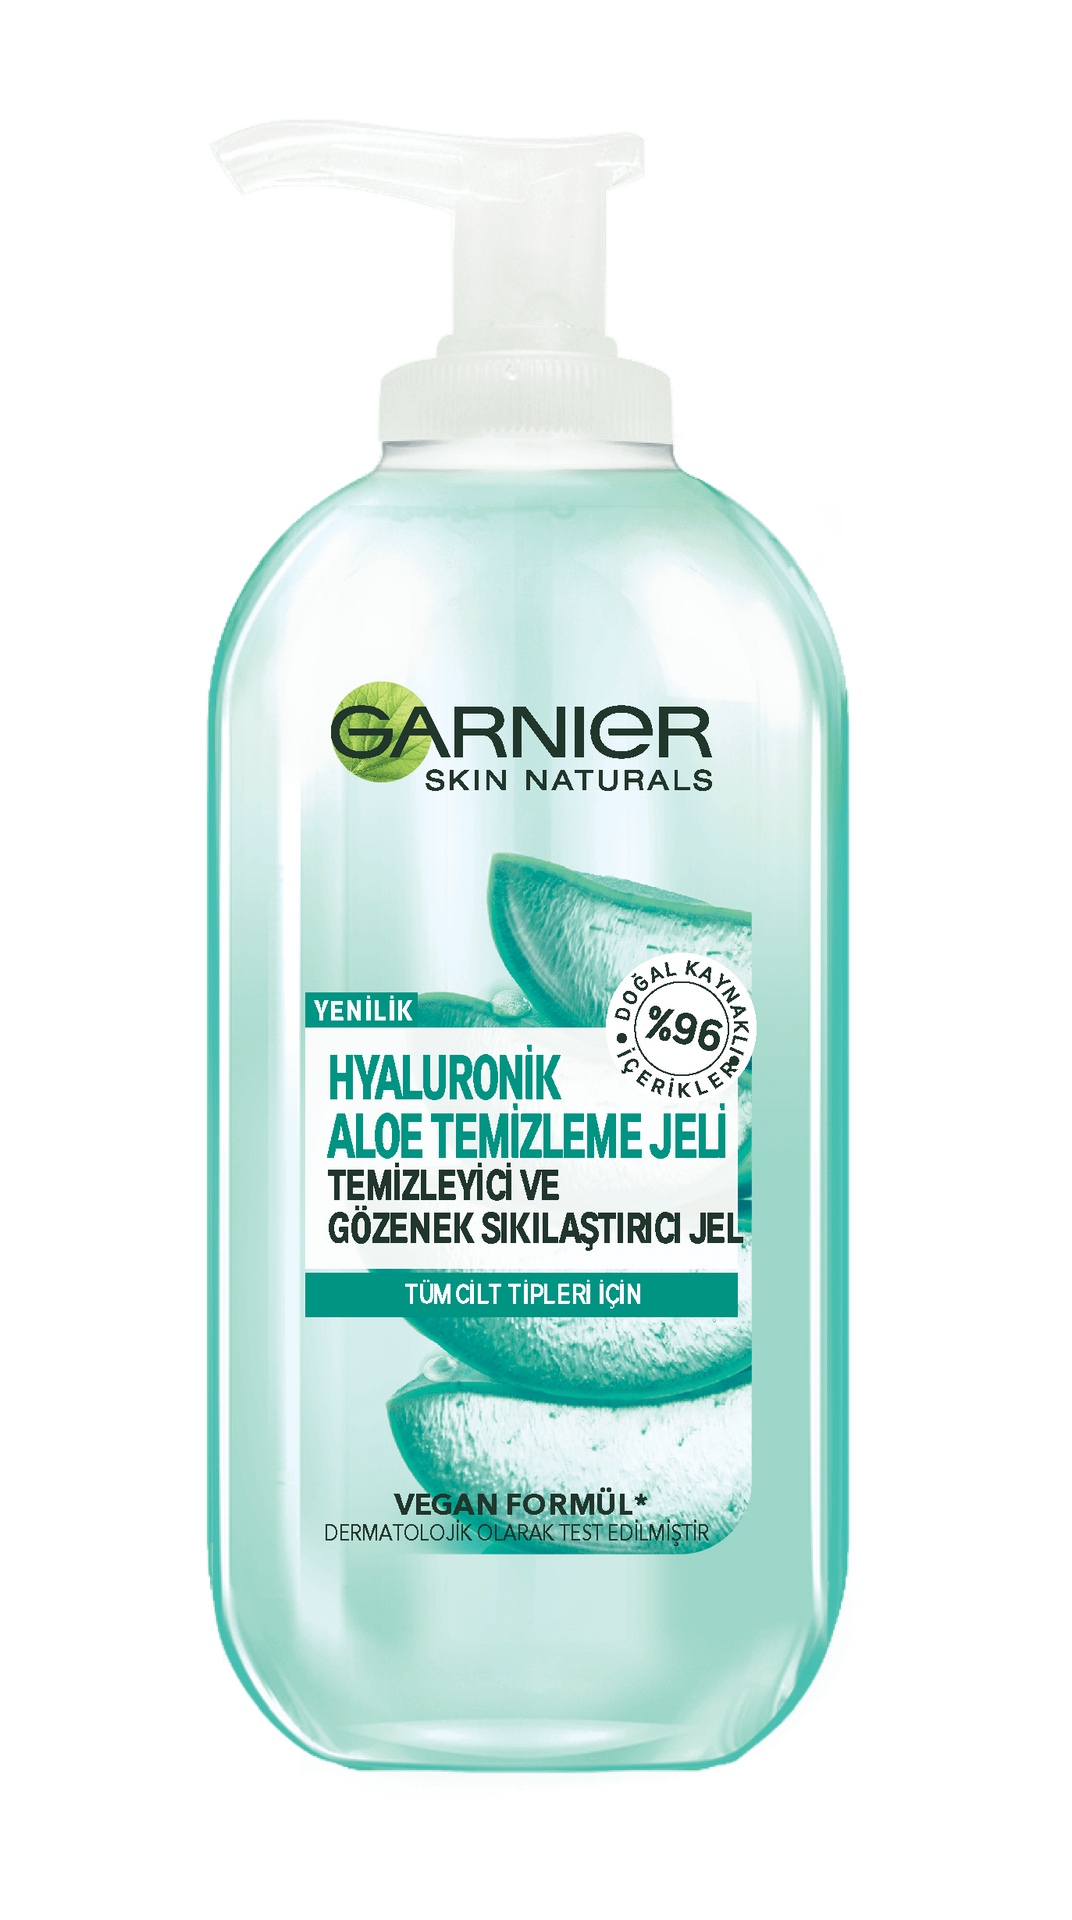 Garnier skin naturals hyaluronik aloe temizleme jeli